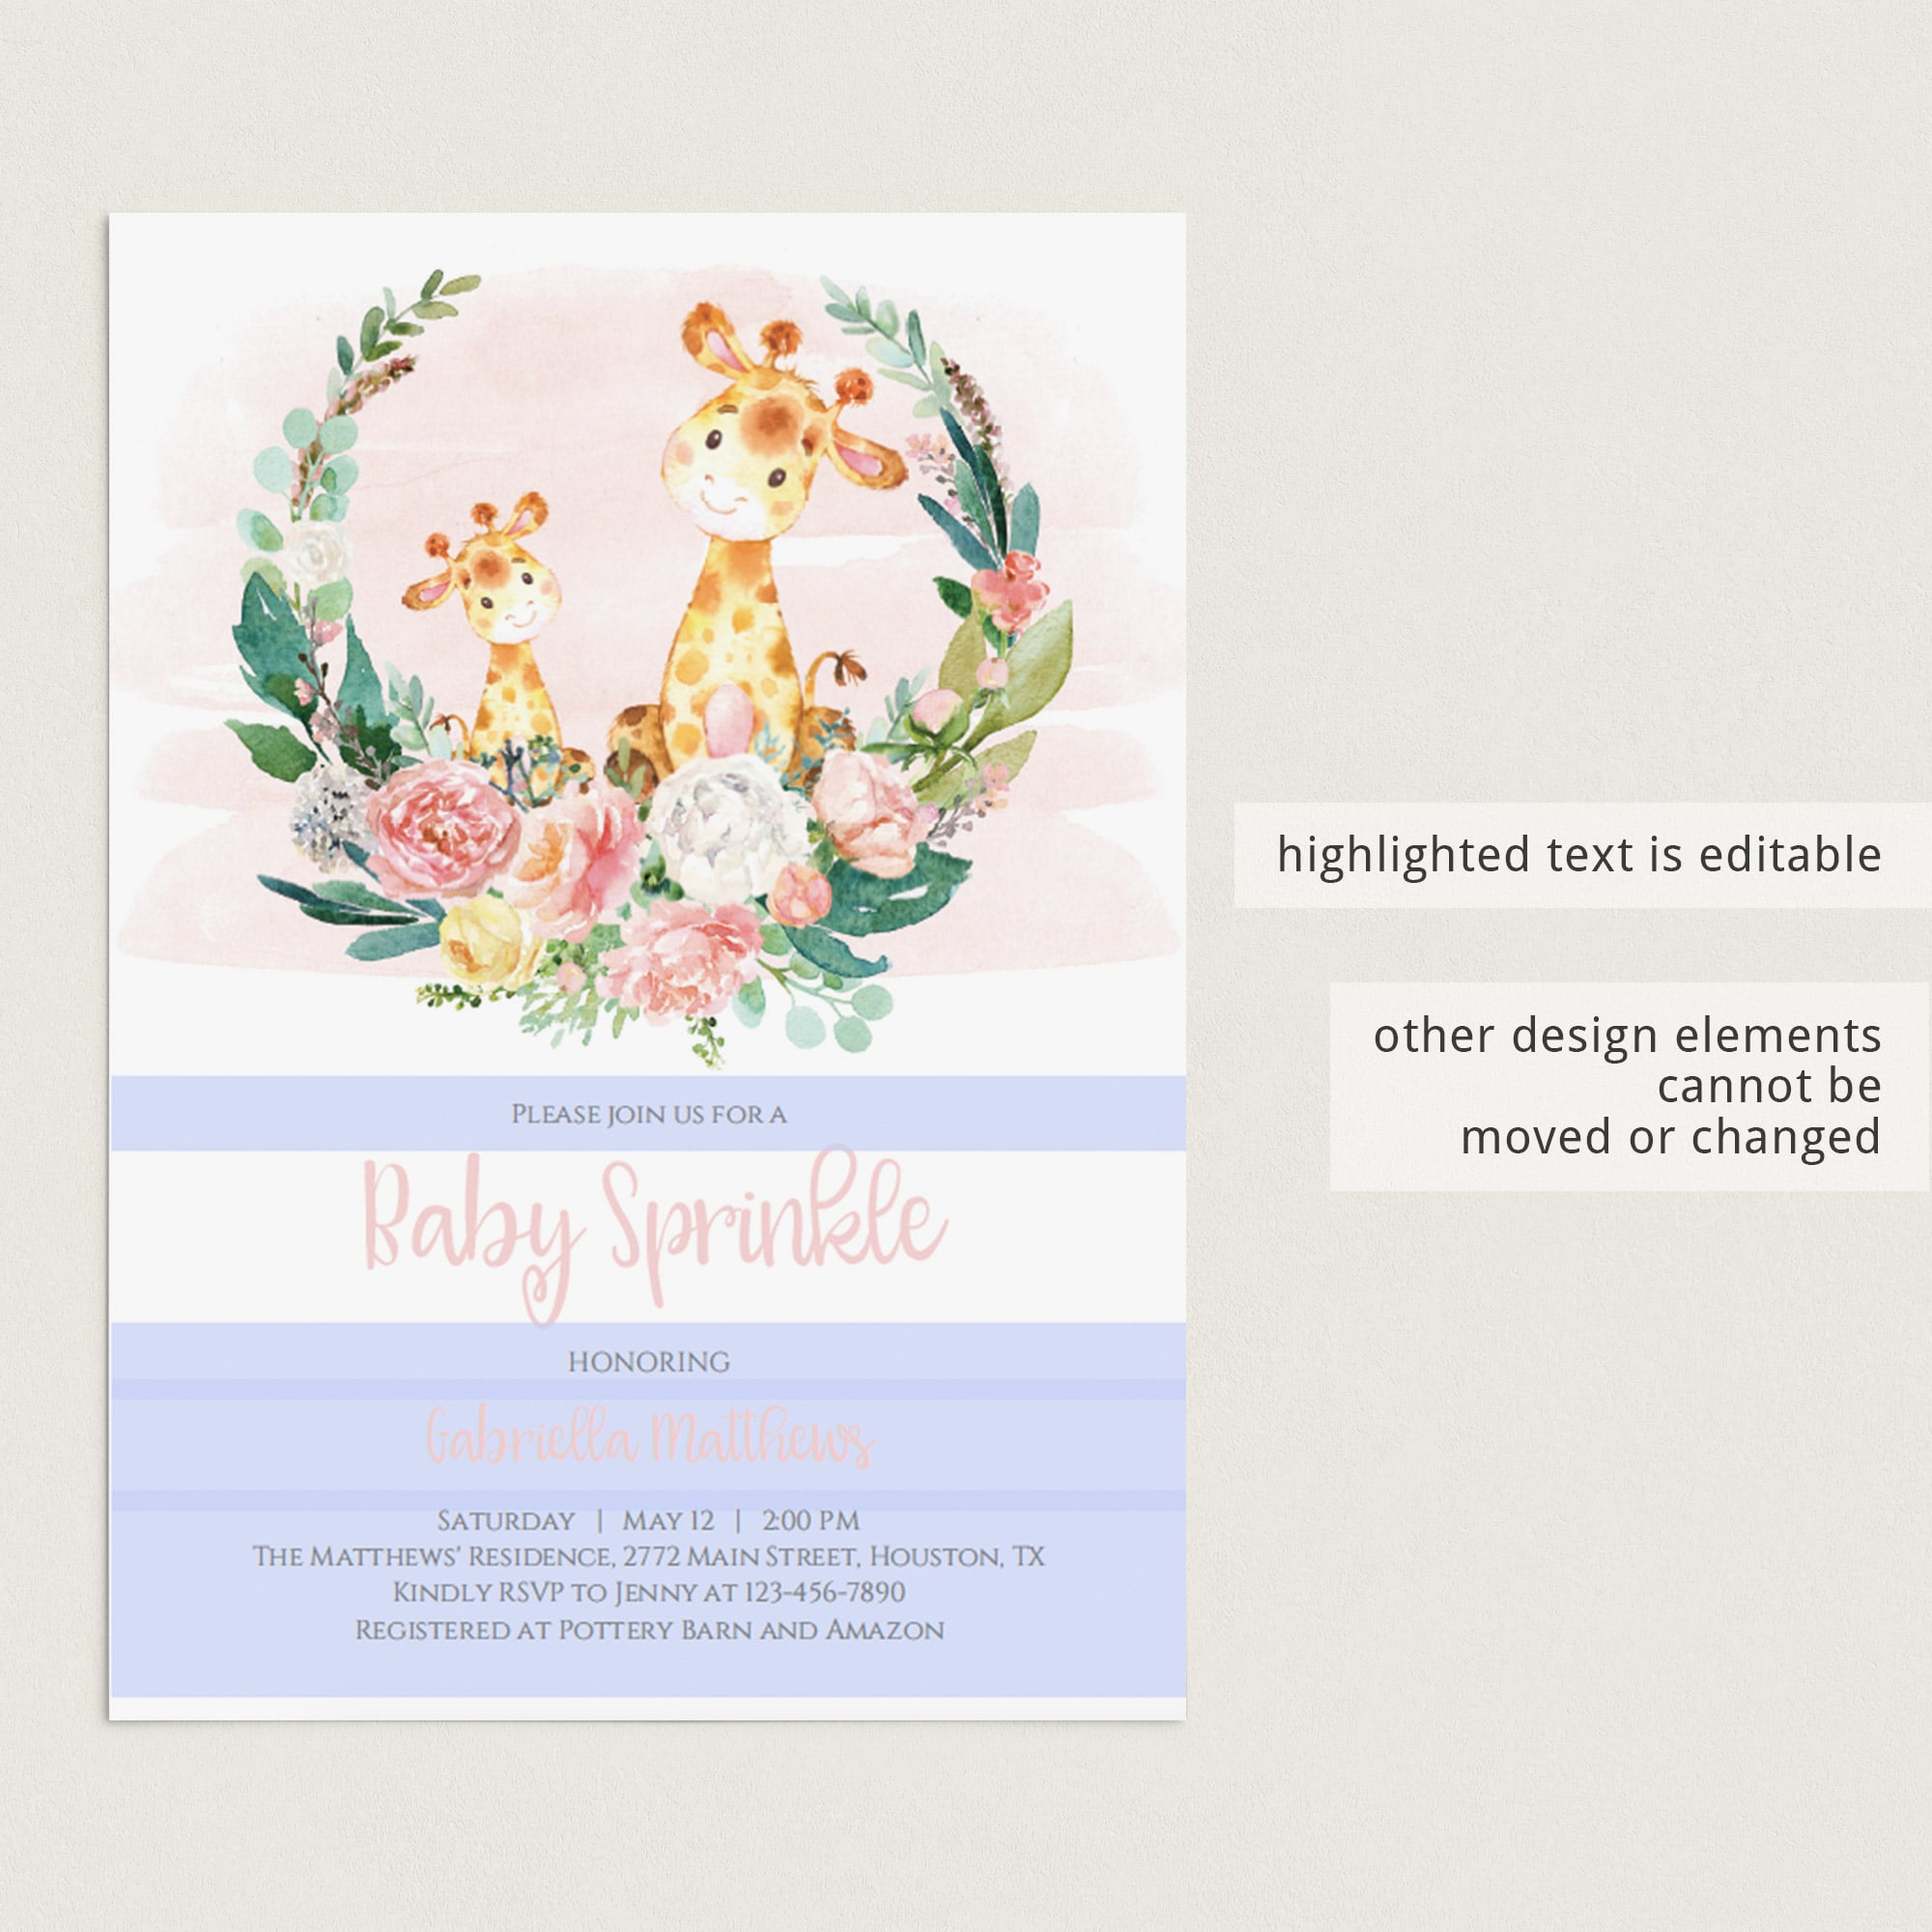 Editable safari theme baby sprinkle invites by LittleSizzle